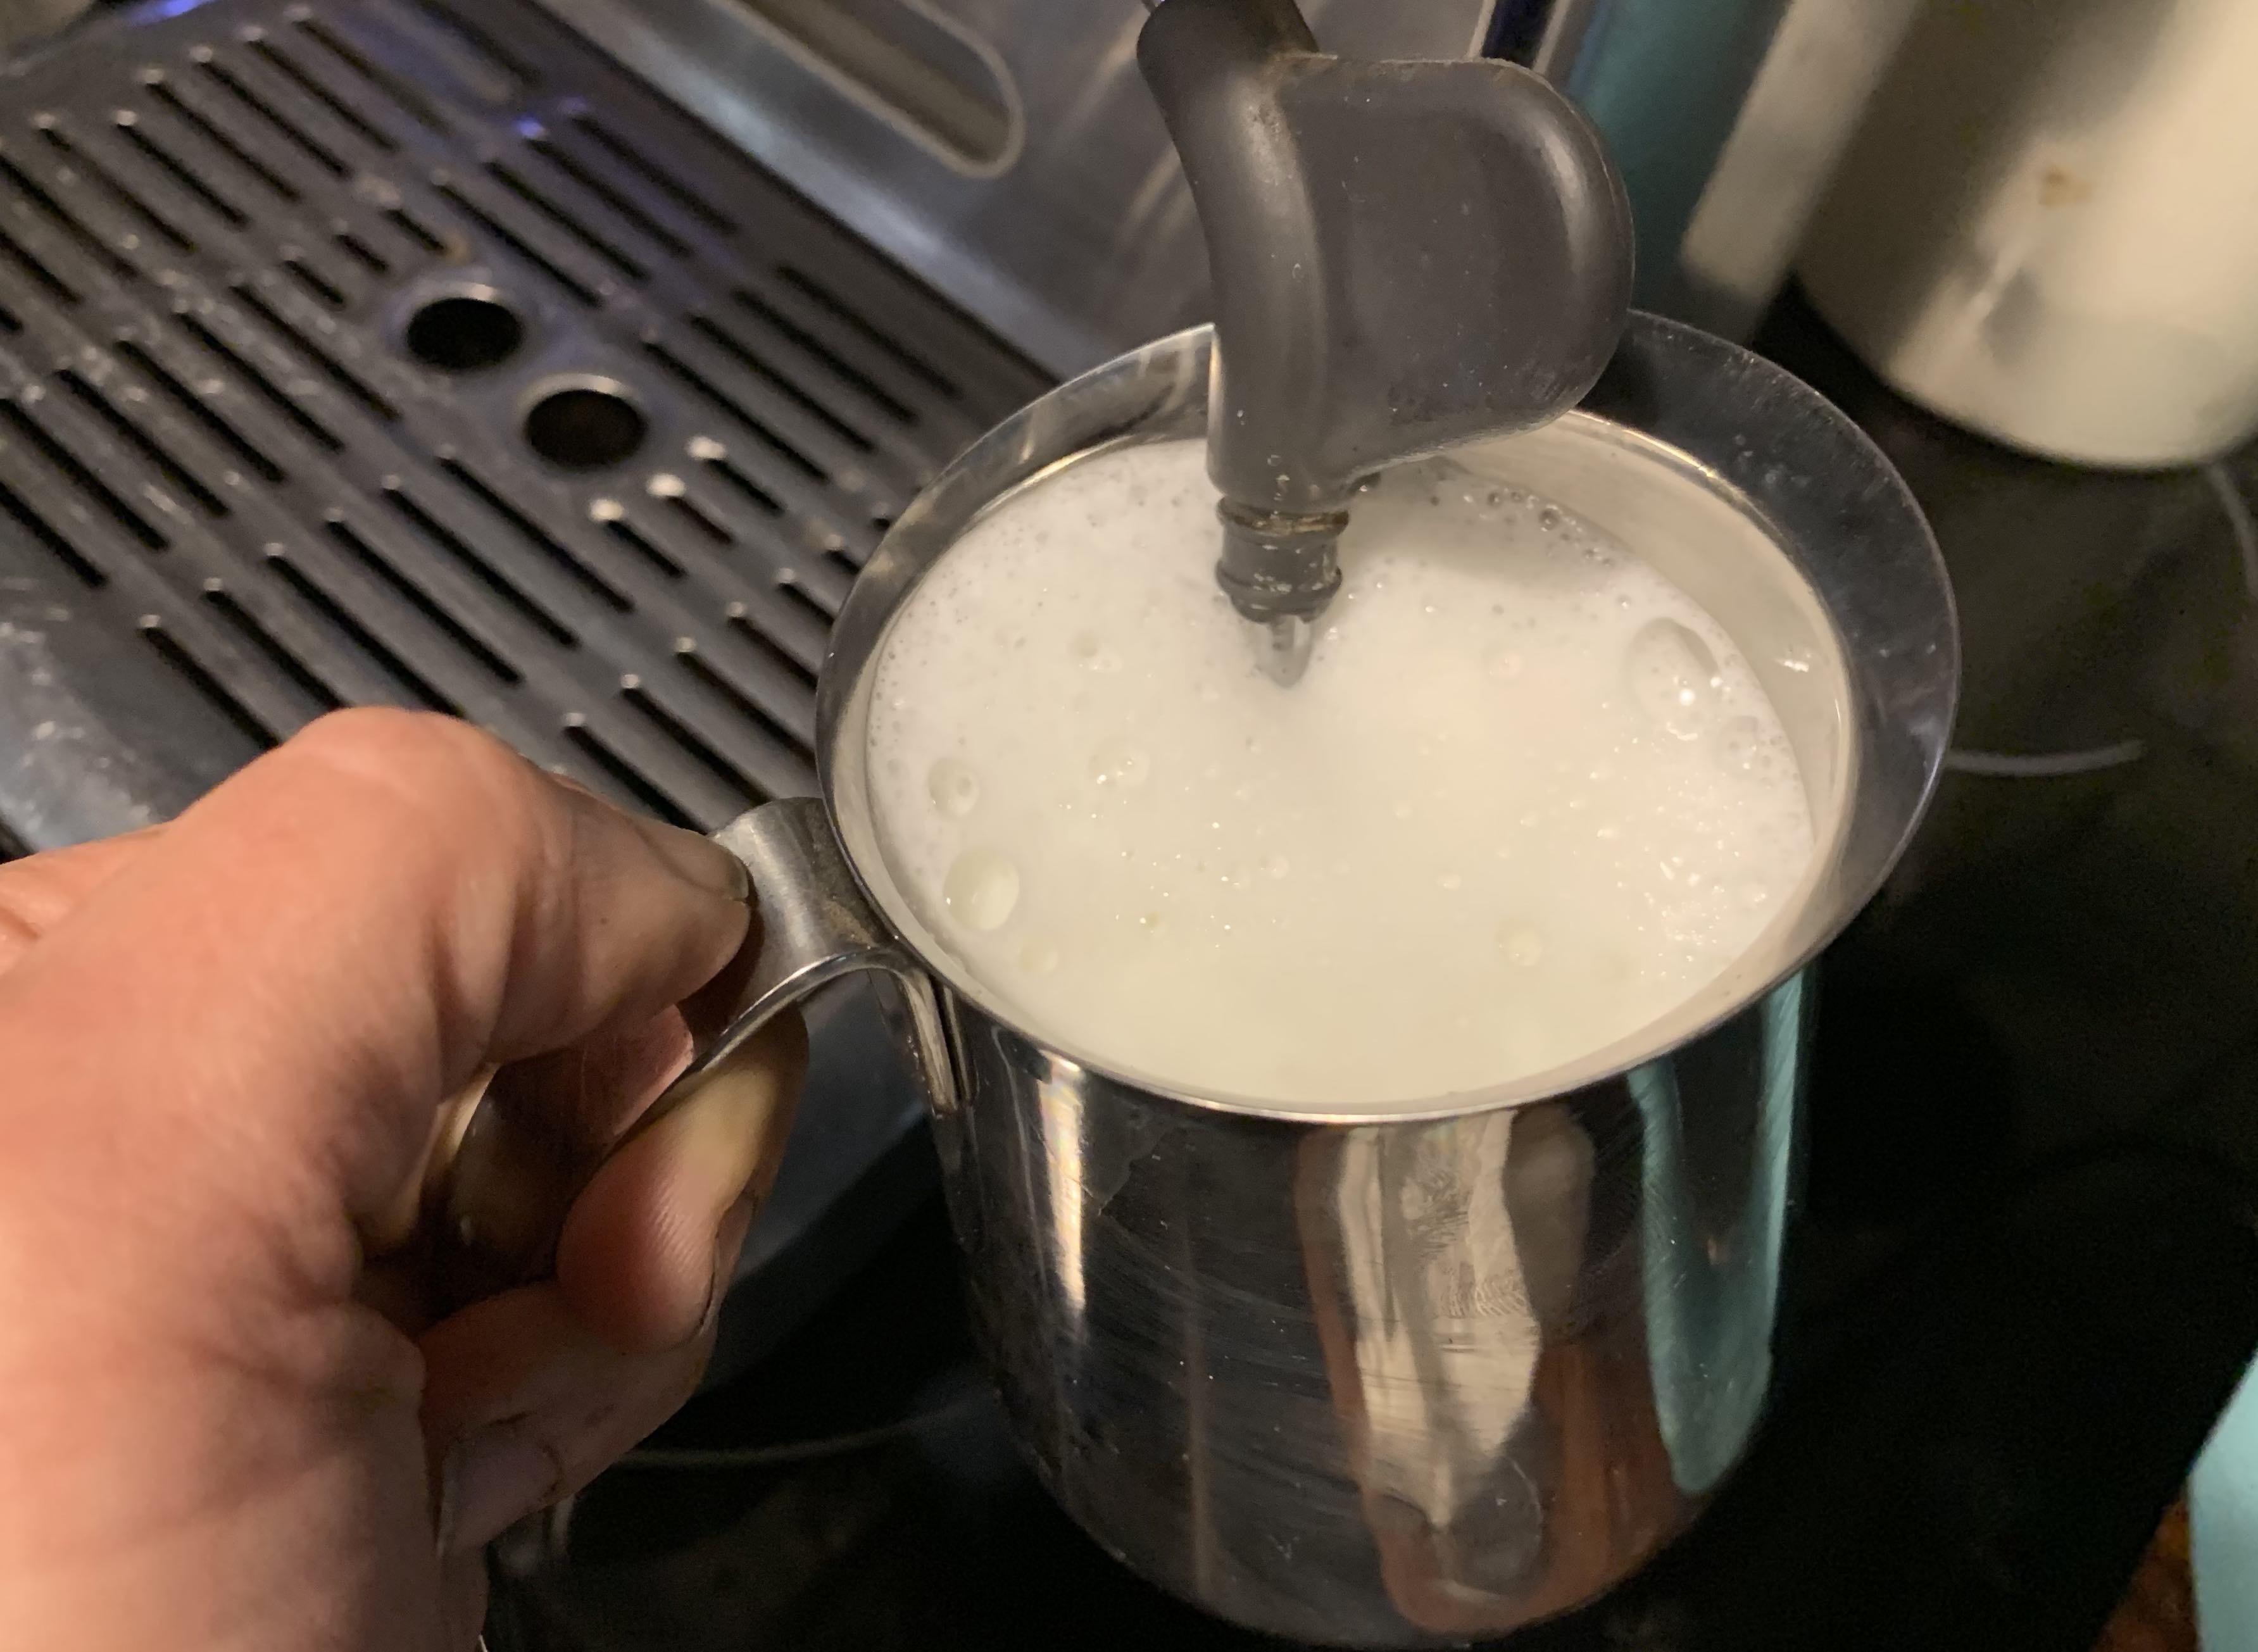 How to foam milk